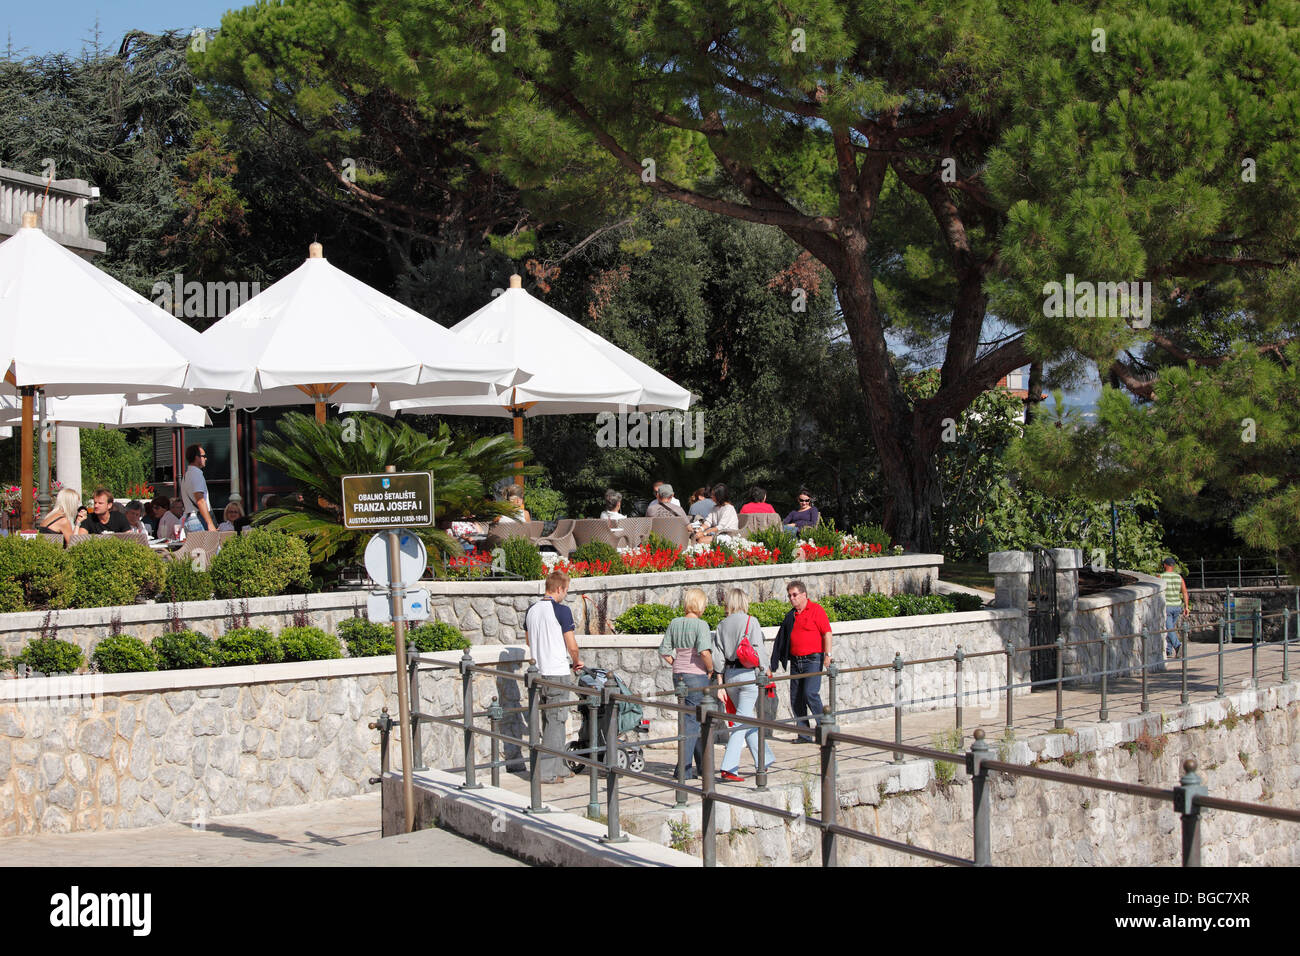 Café Wagner, Angiolina Park, Lungomare promenade, Opatija, Abbazia, Istria, Croatia, Europe Stock Photo